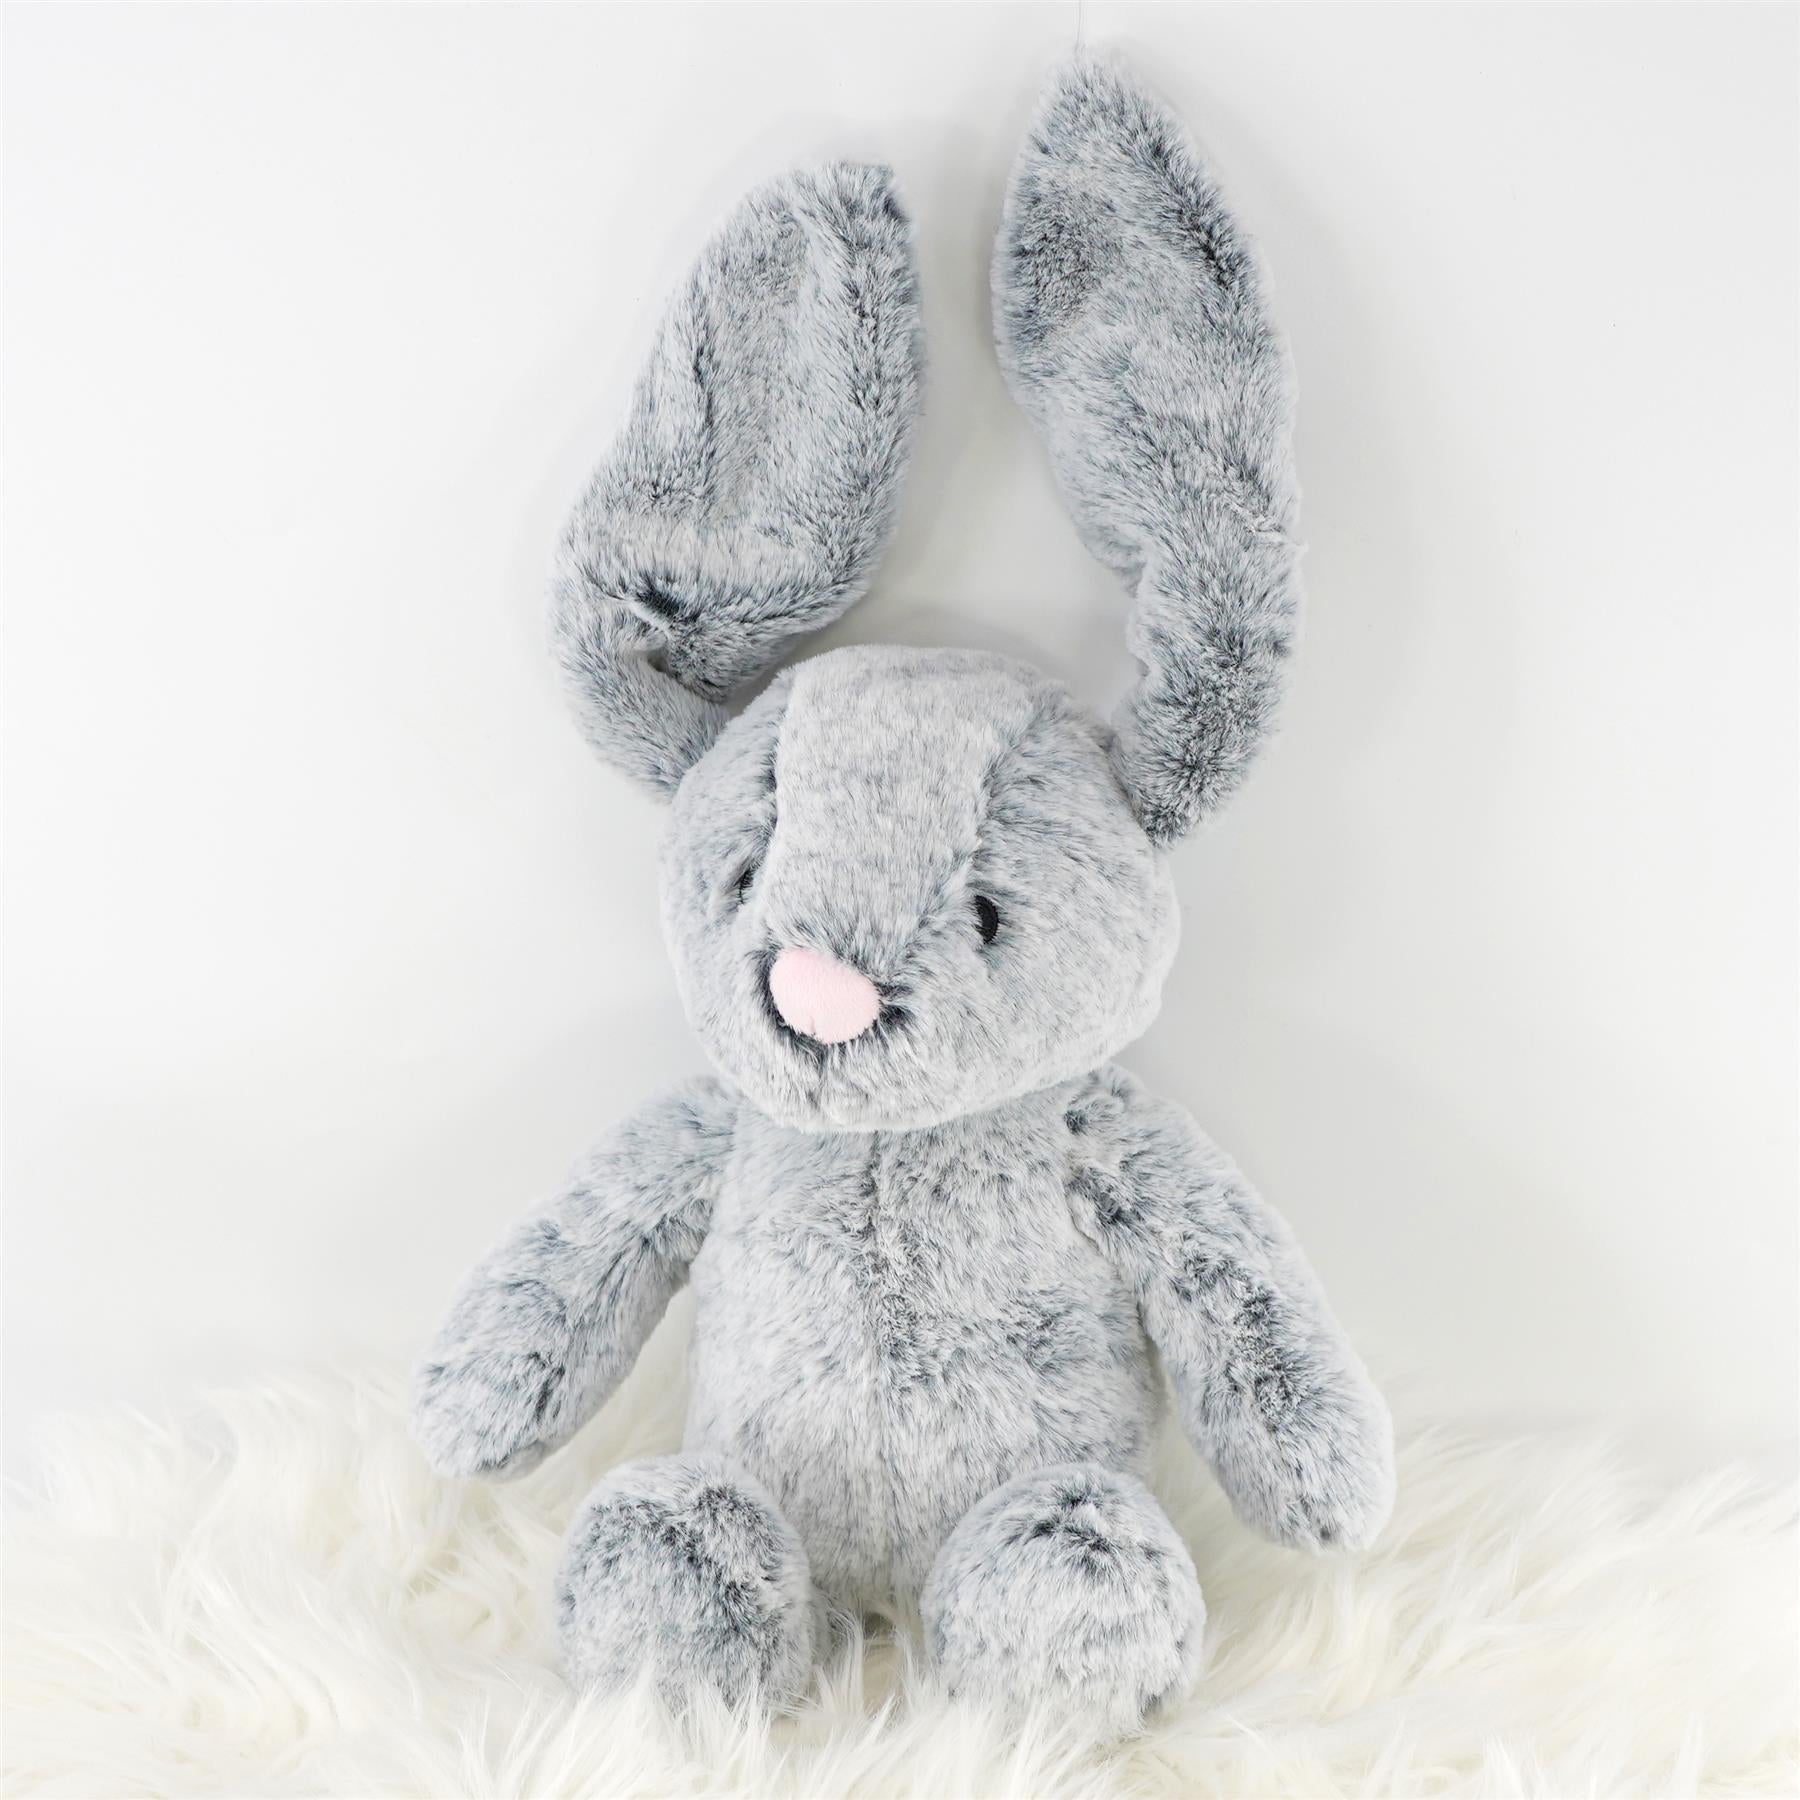 10" Plush Super Soft Grey Rabbit Cuddly Toy by The Magic Toy Shop - The Magic Toy Shop